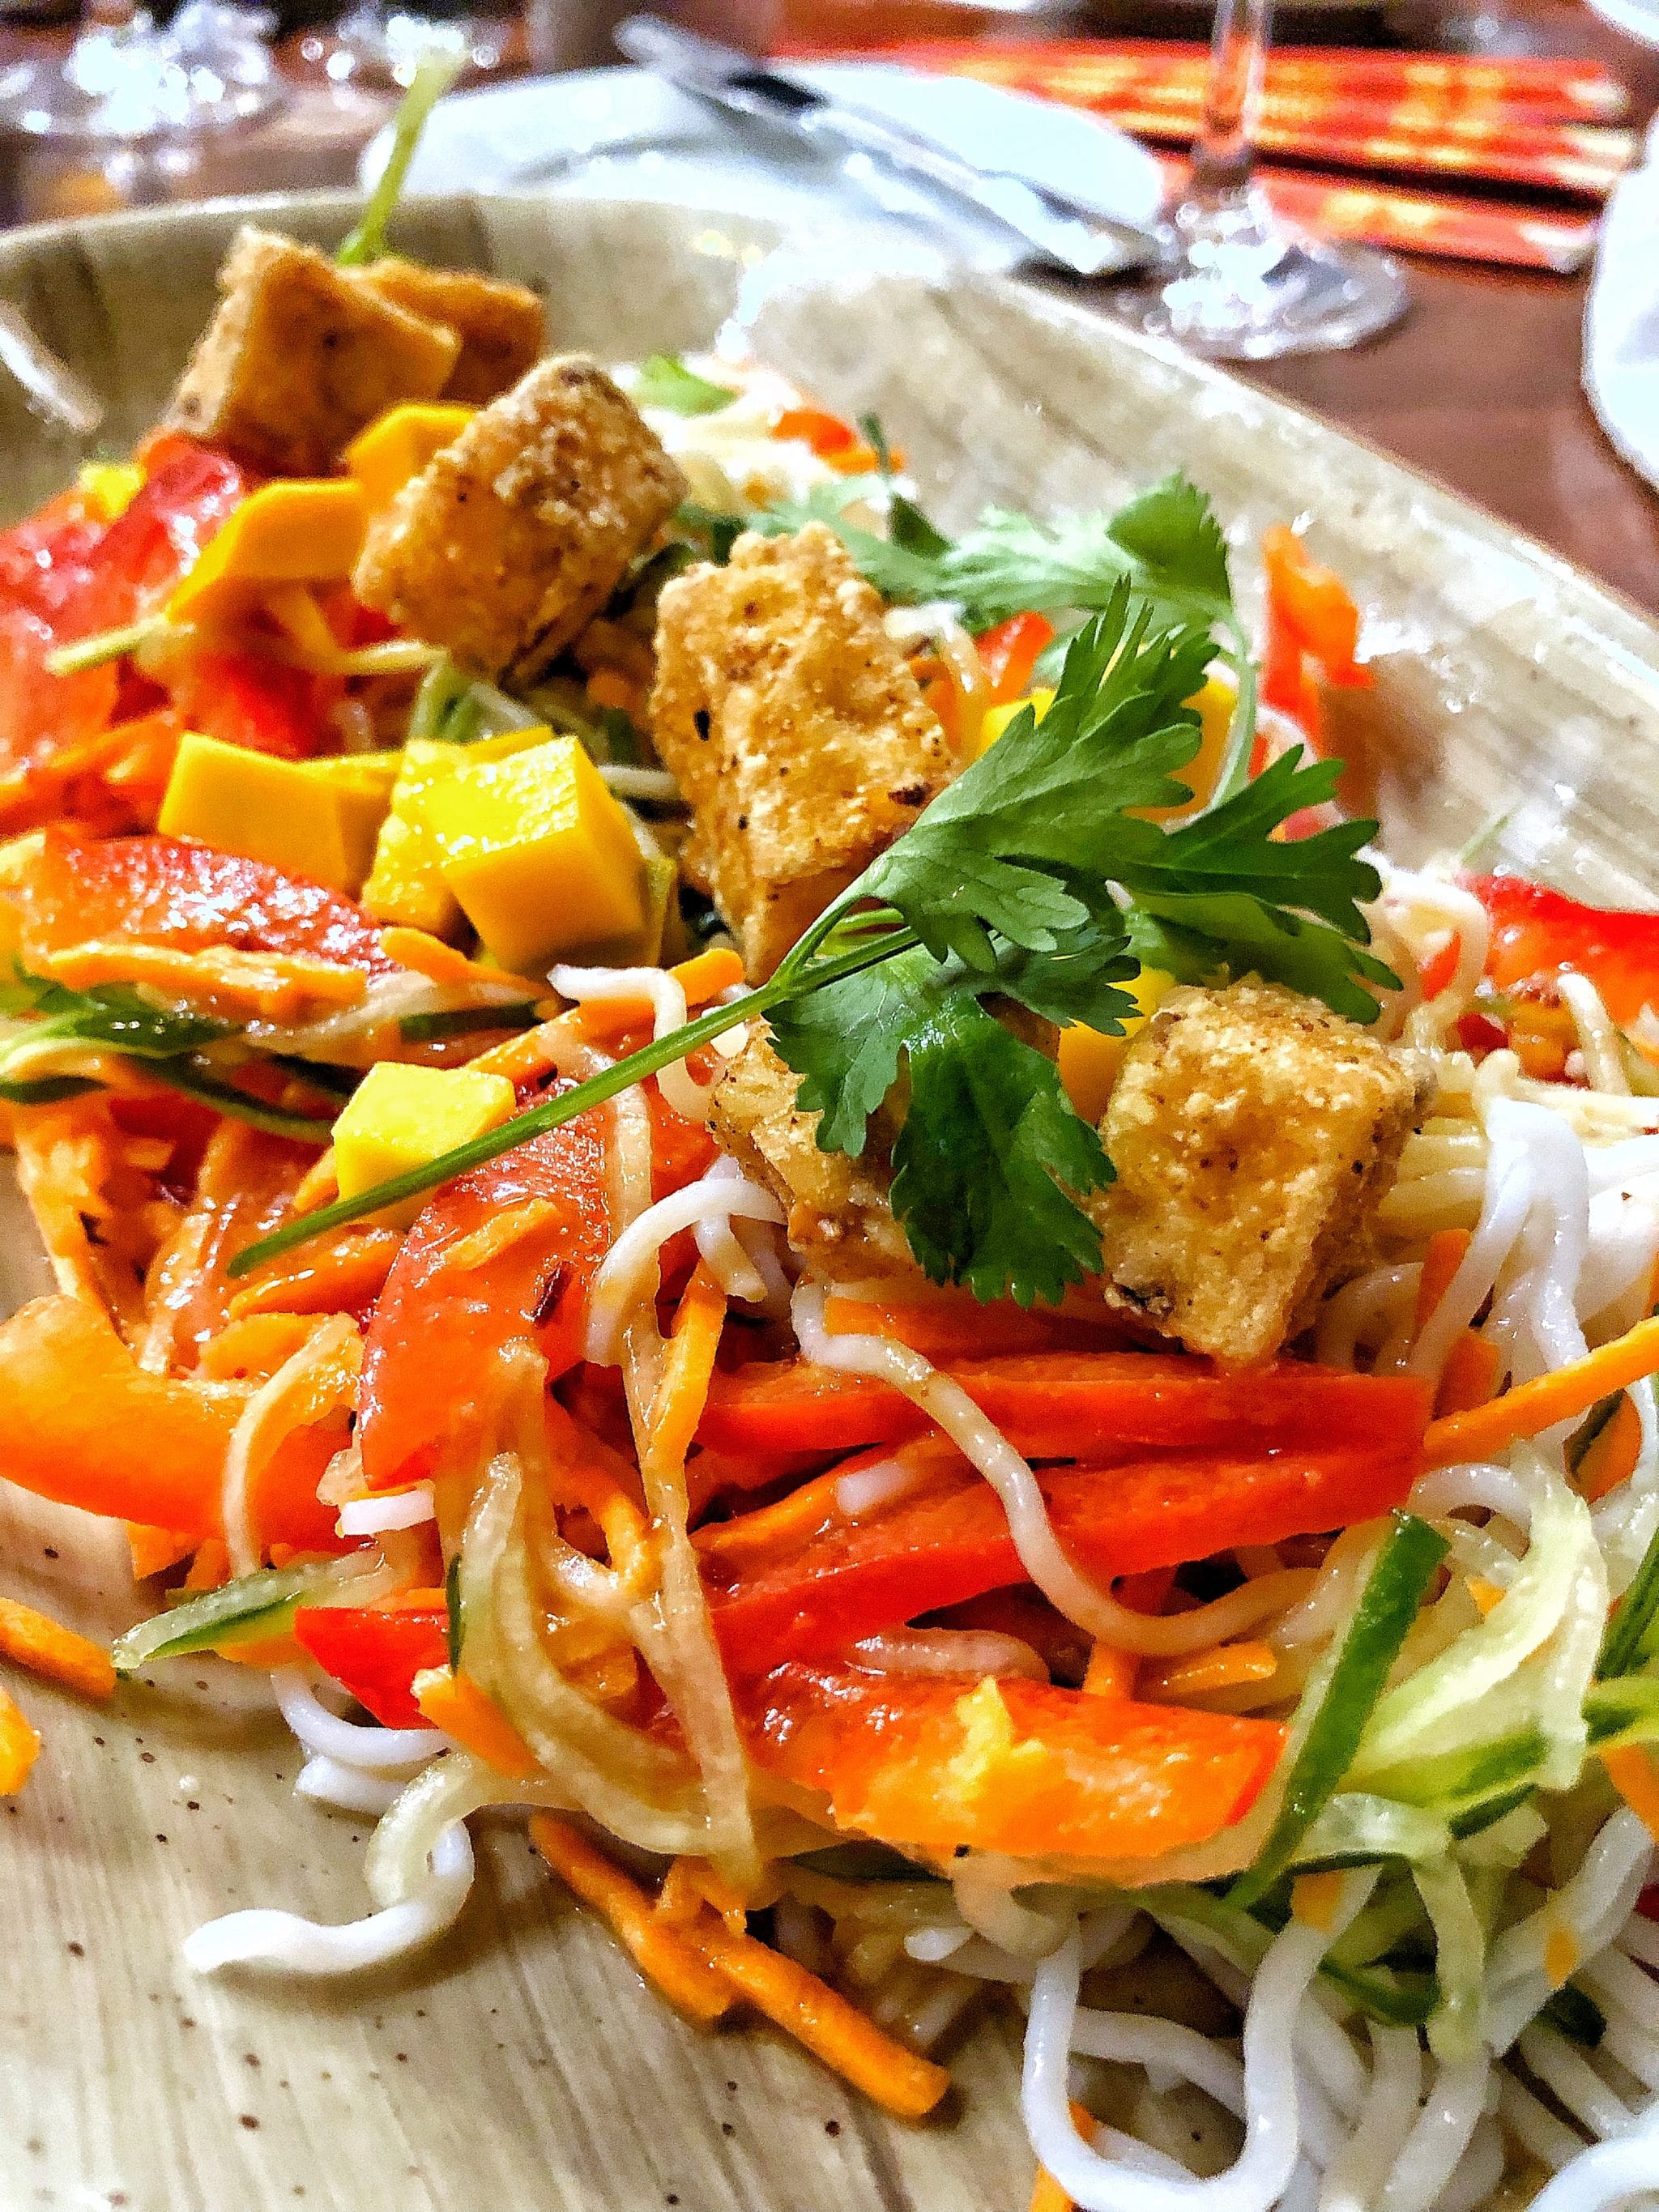 Vegan Tofu Noodle Salad at Kona Cafe in Disney’s Polynesian Village Resort at Walt Disney World